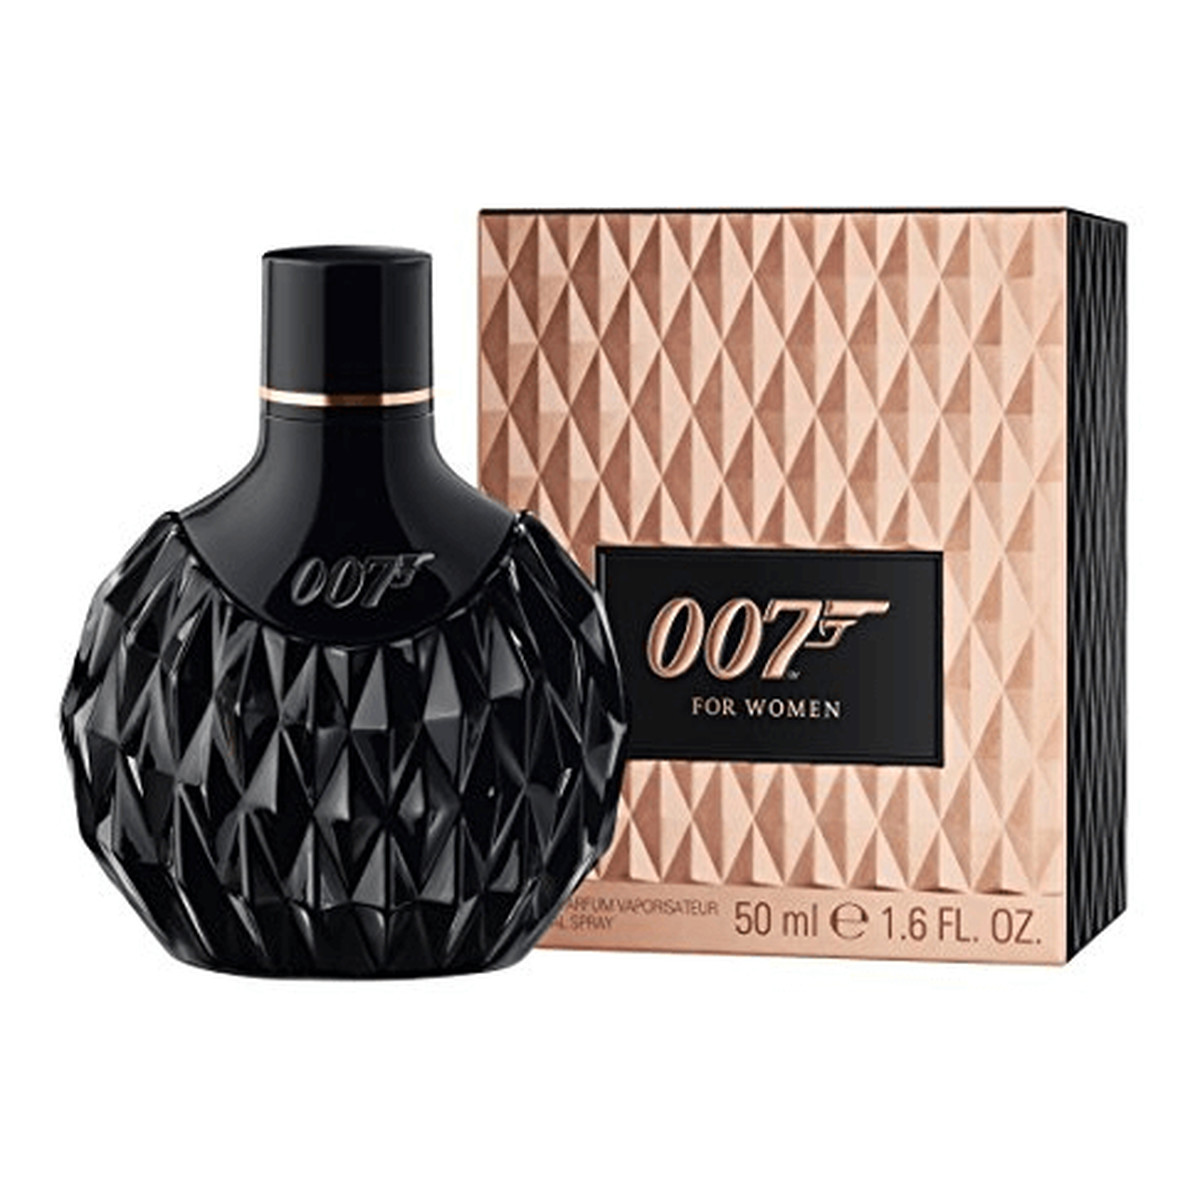 James Bond 007 Woda Perfumowana 50ml